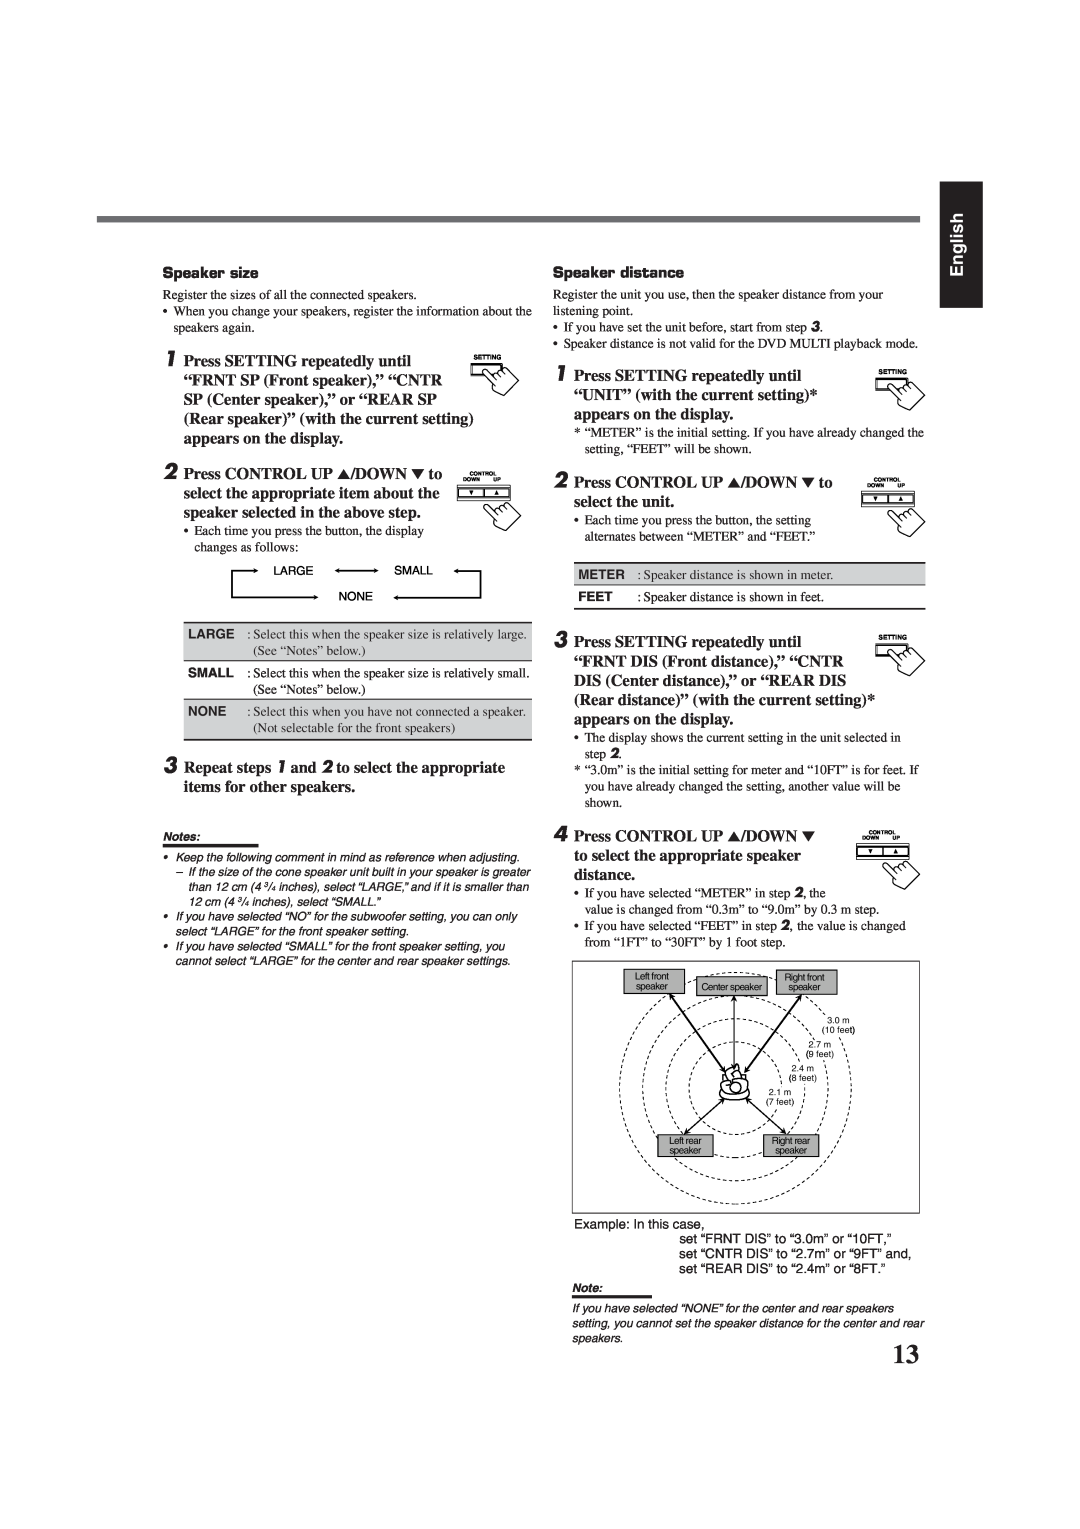 JVC RX-6020VBK manual English, Press CONTROL UP 5/DOWN ∞ to CONTROL 